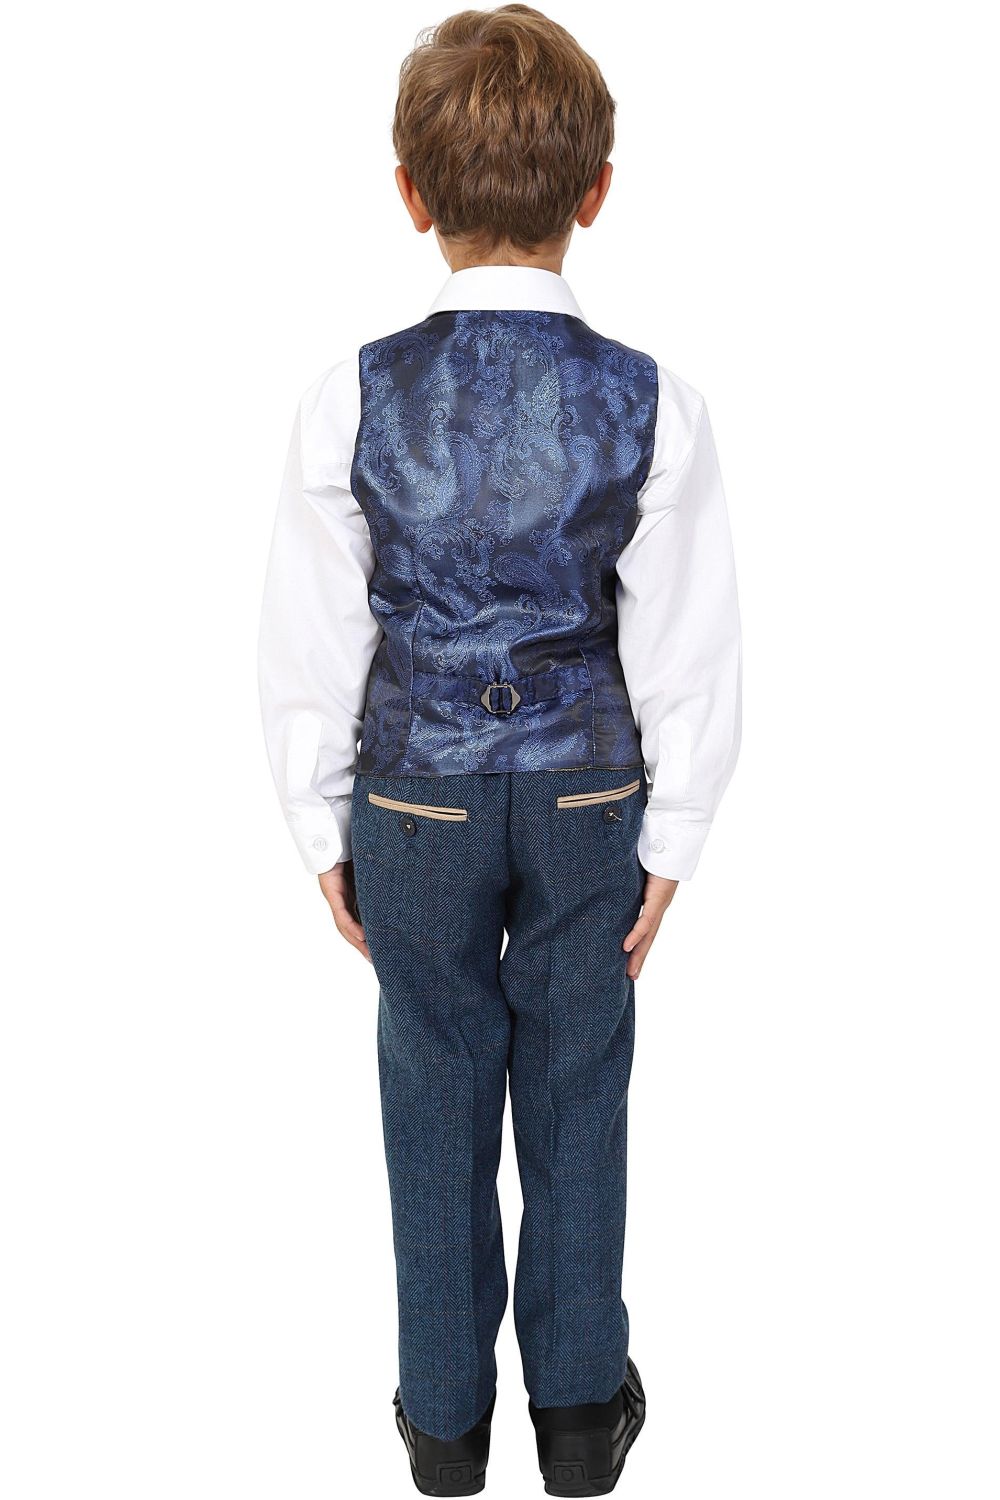 Marc Darcy Kids Boys Dion Blue Check Tweed Three piece Suit